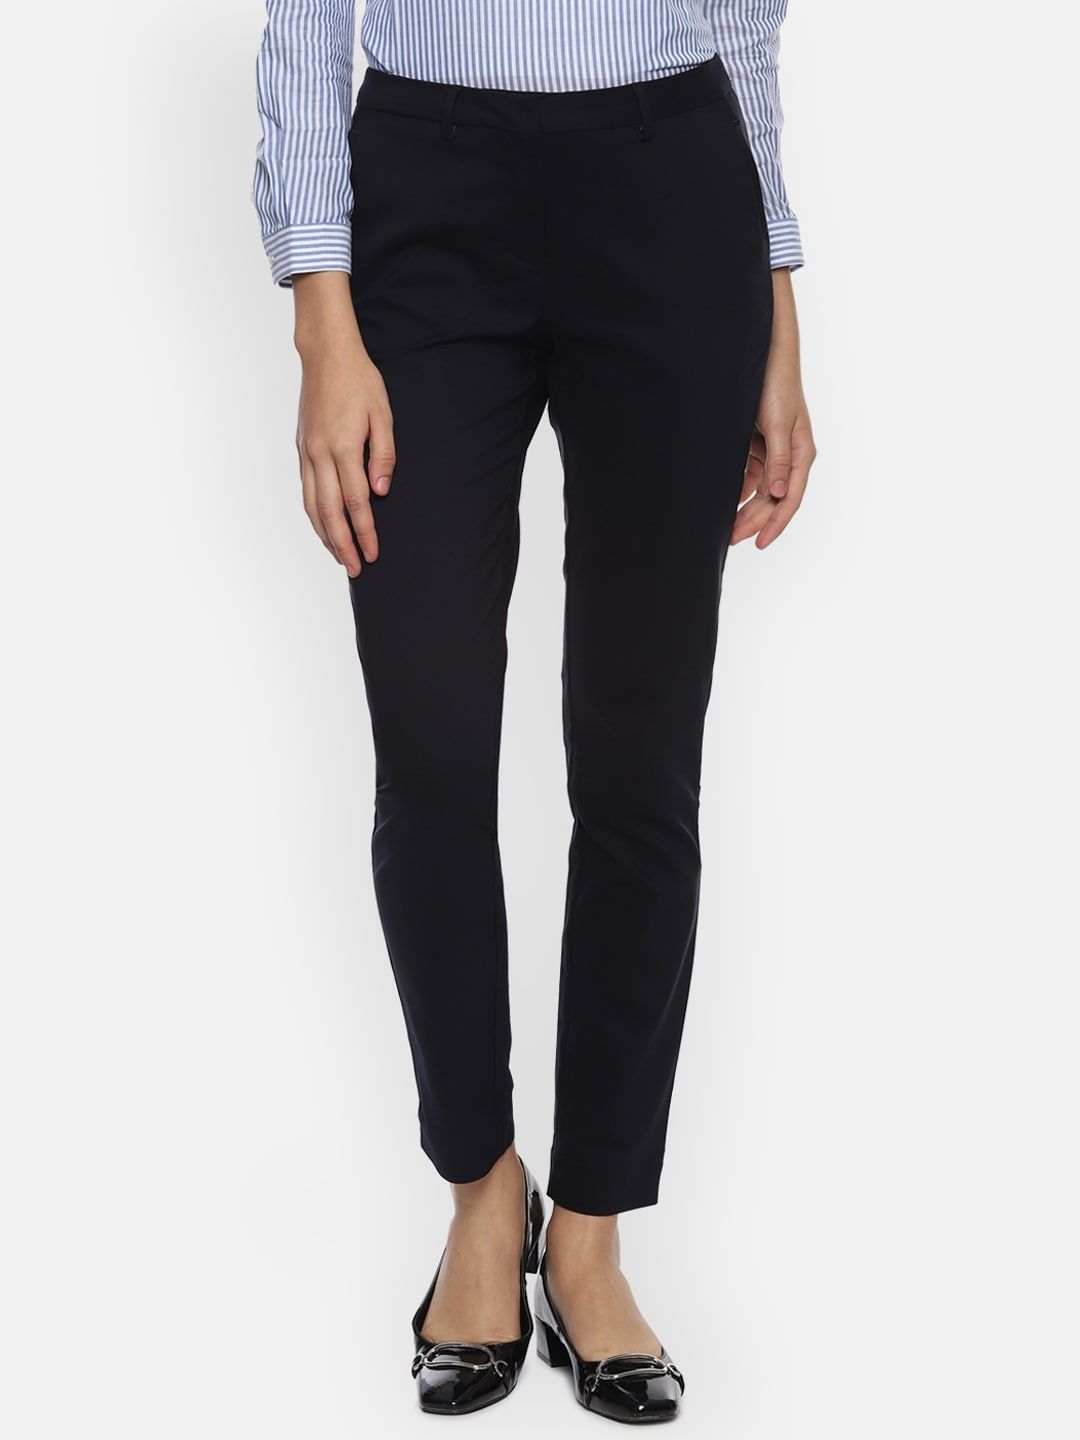 Buy Women Black Regular Fit Check Casual Trousers Online  812065  Allen  Solly